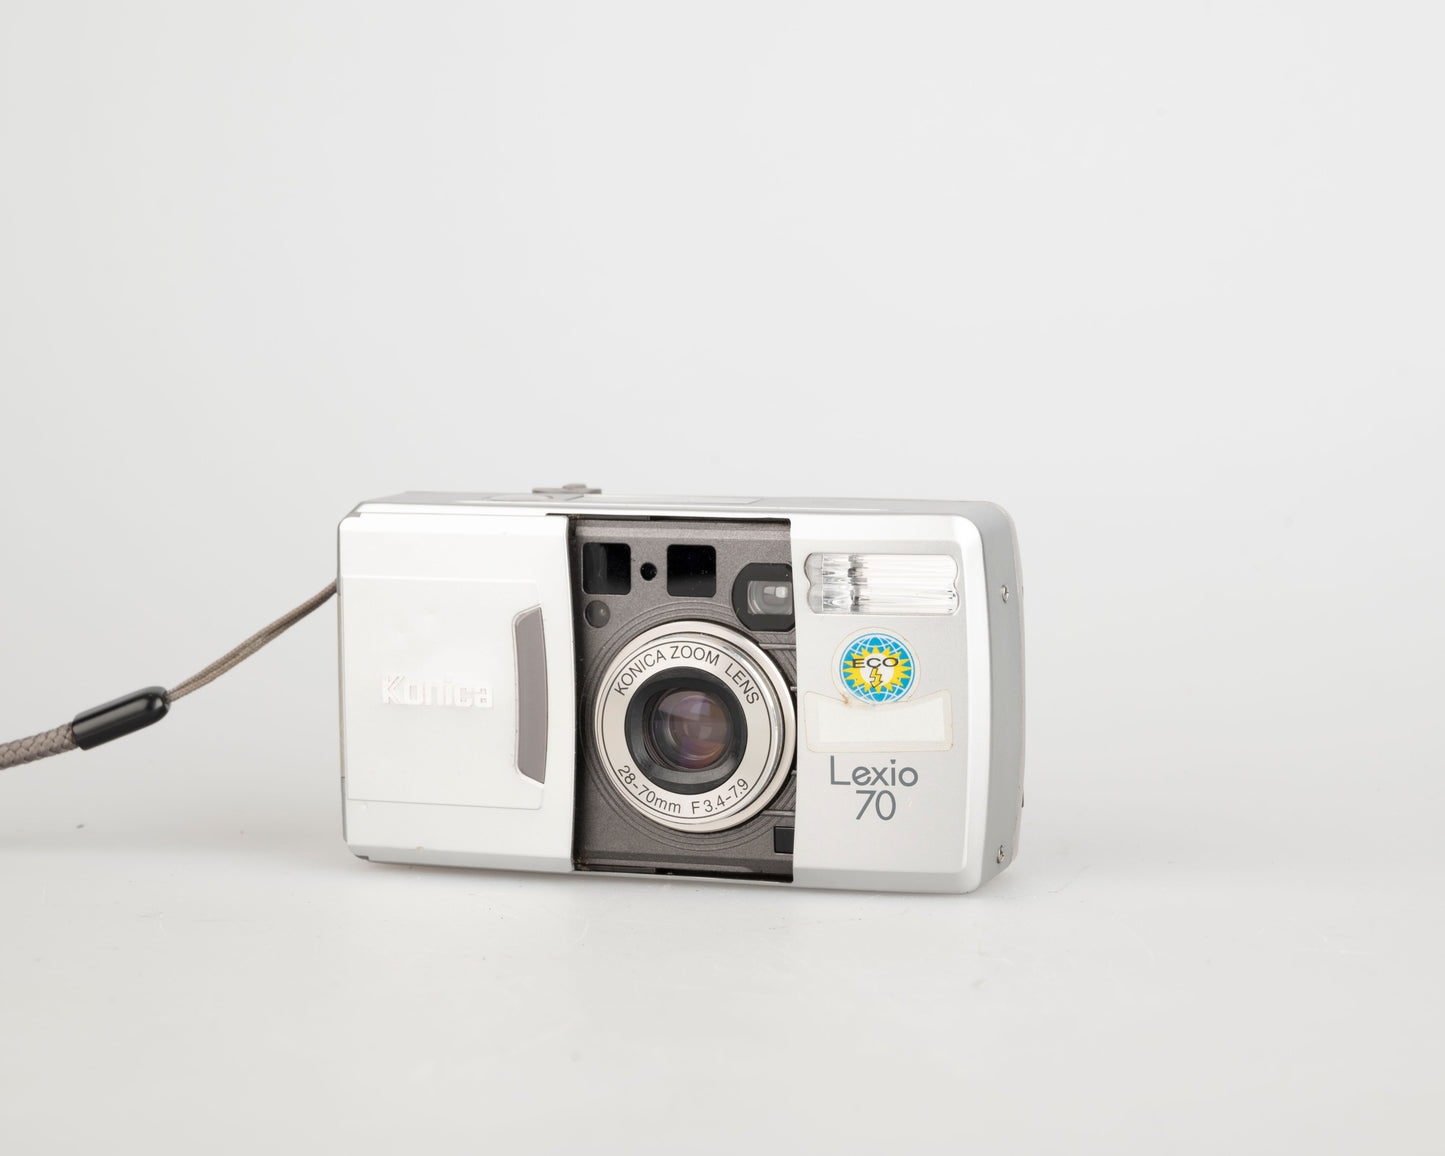 Konica Lexio 70 compact 35mm camera w/ case (serial 6685579)